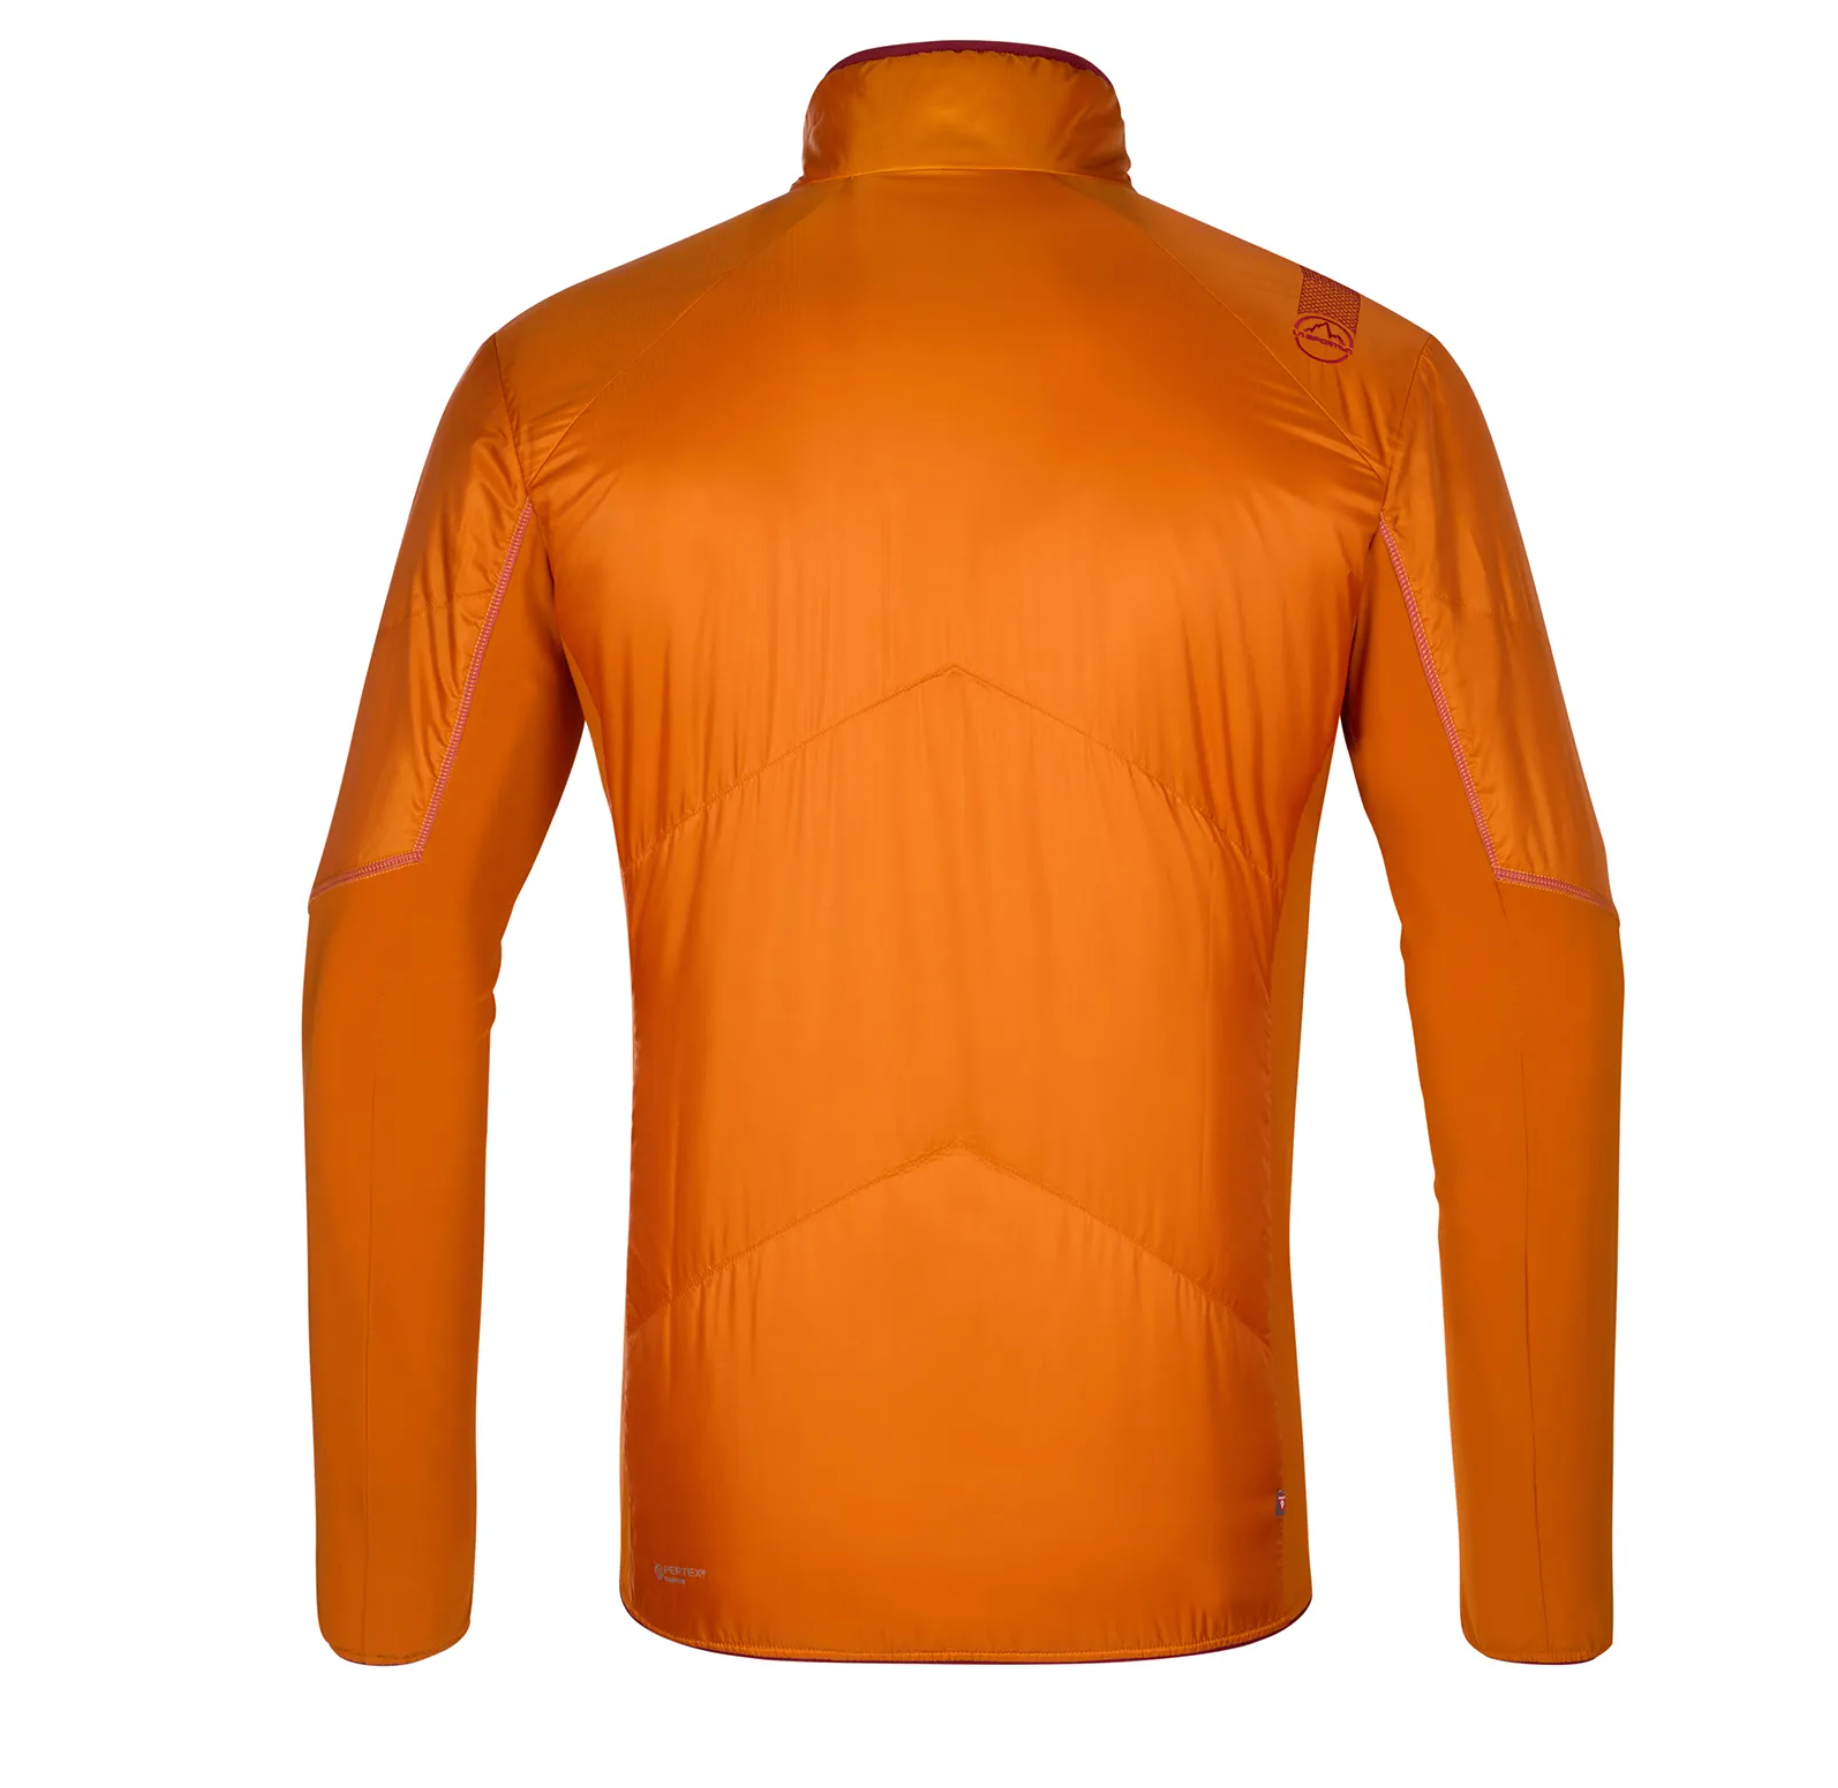 La Sportiva Ascent Primaloft Jacket Mens